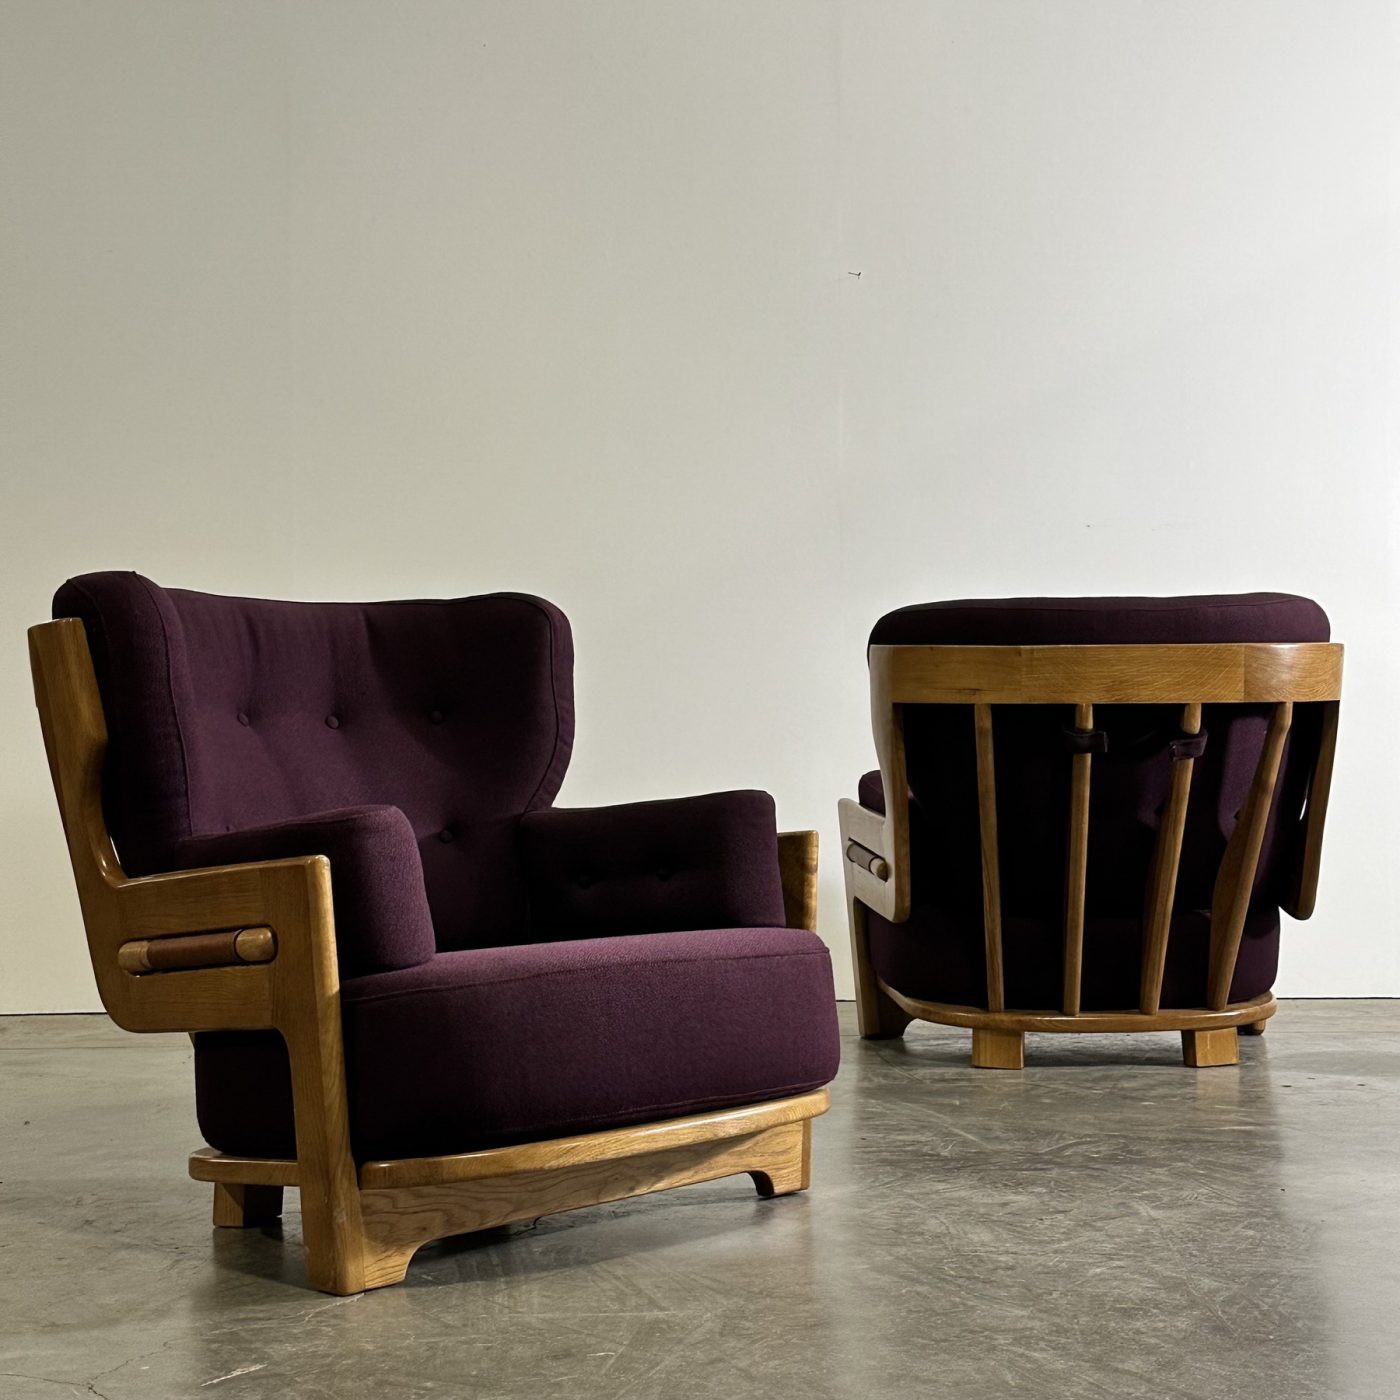 objet-vagabond-denis-armchairs0005